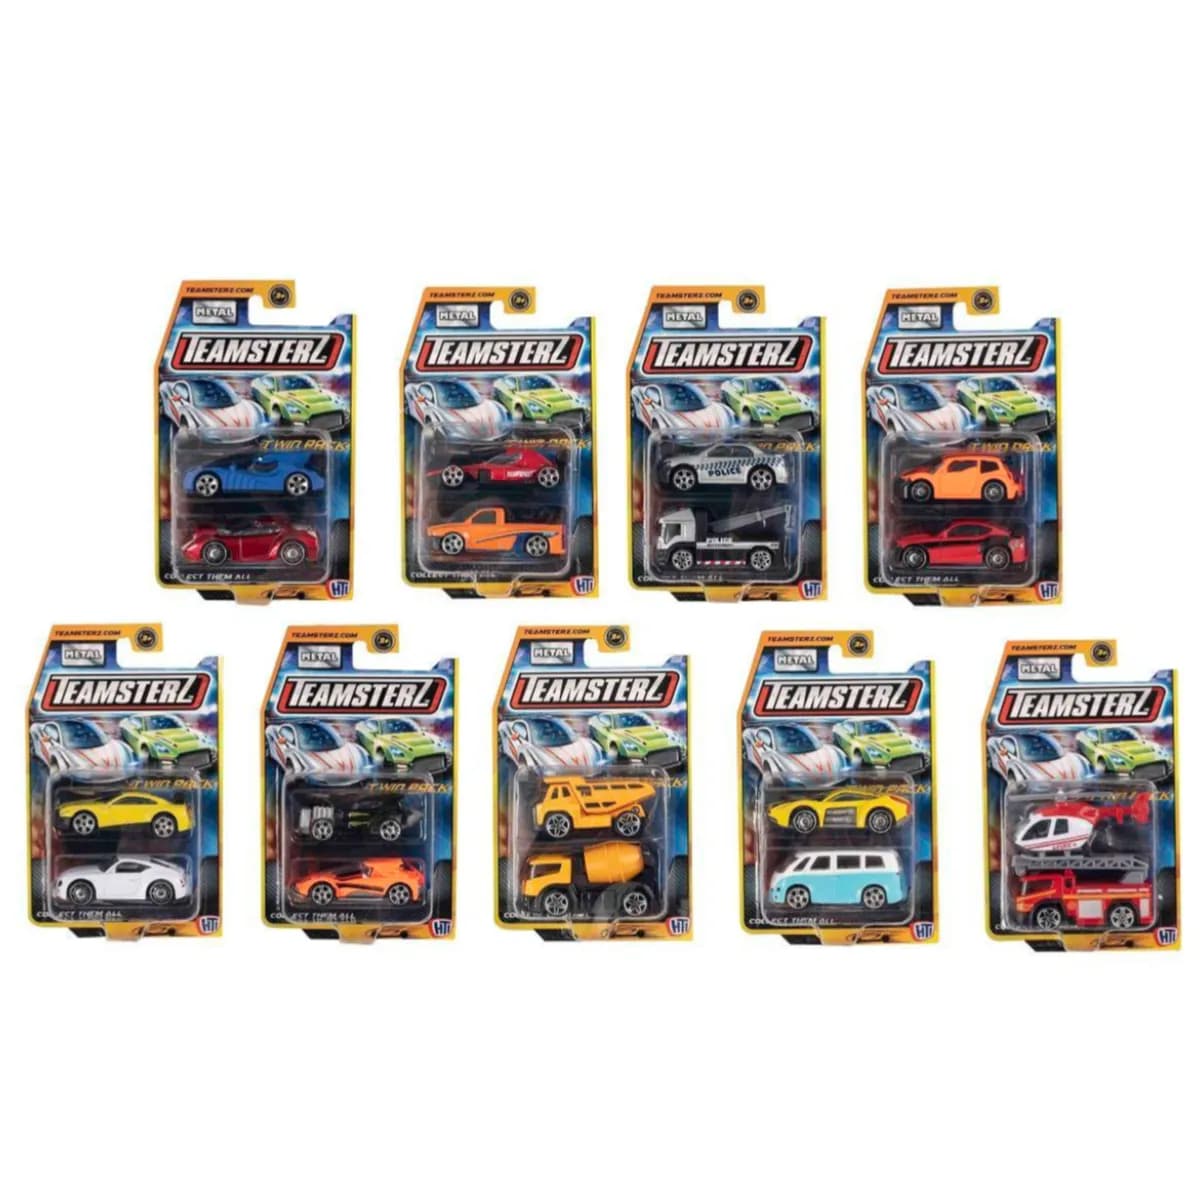 Teamsterz Street Machines Die Cast Cars Pack Of 2 -Assorted - CALT28 